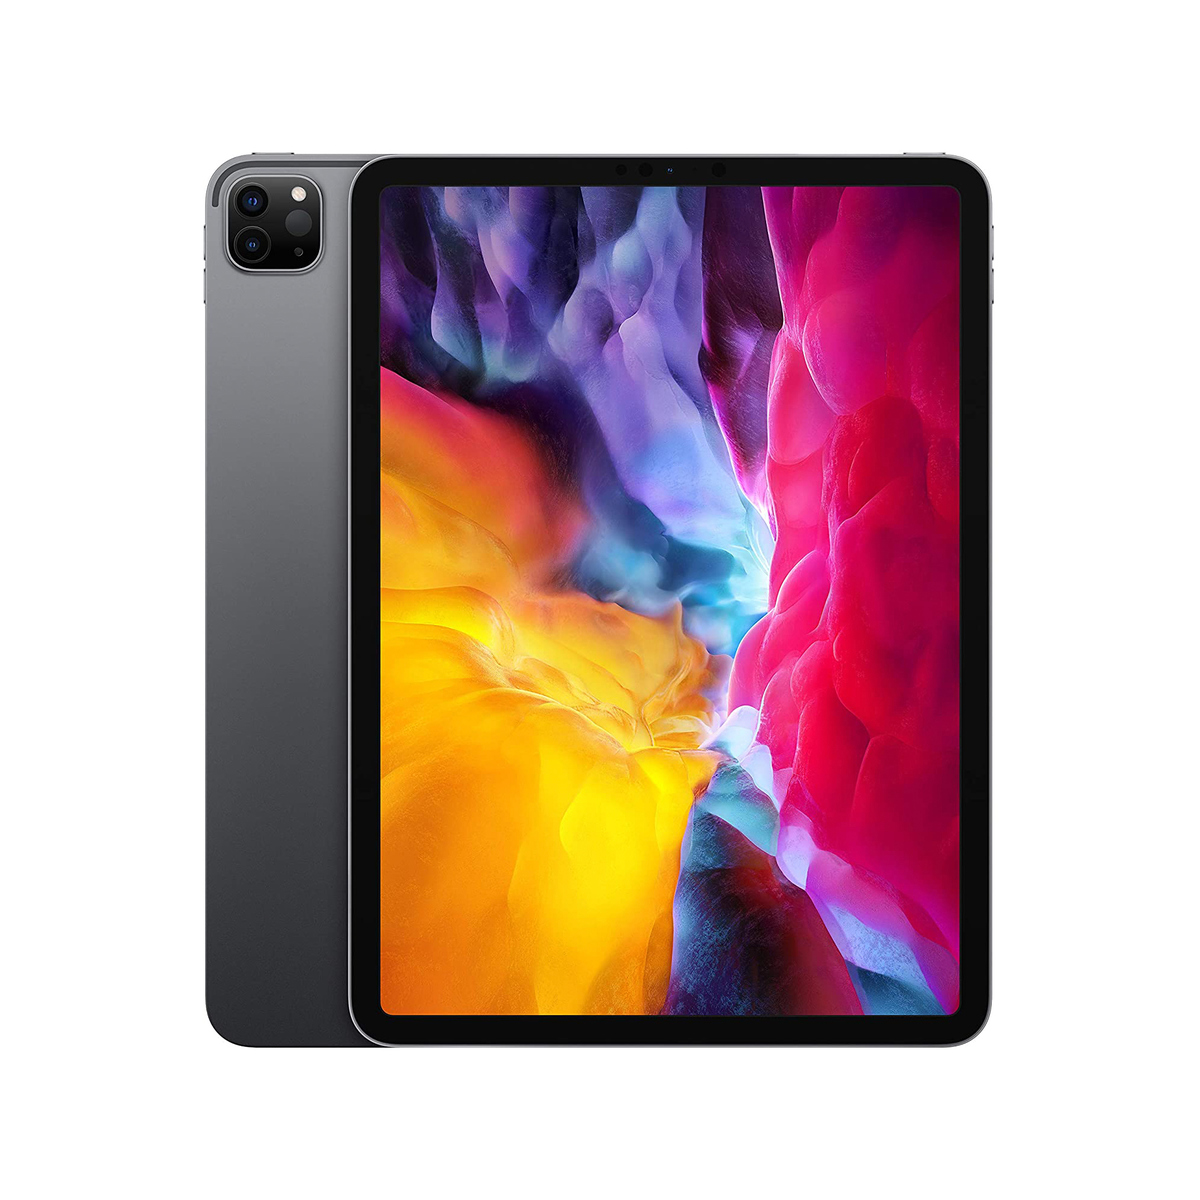 Apple iPad Pro (11-inch, Wi-Fi, 128GB) - Space Gray (2nd Generation)